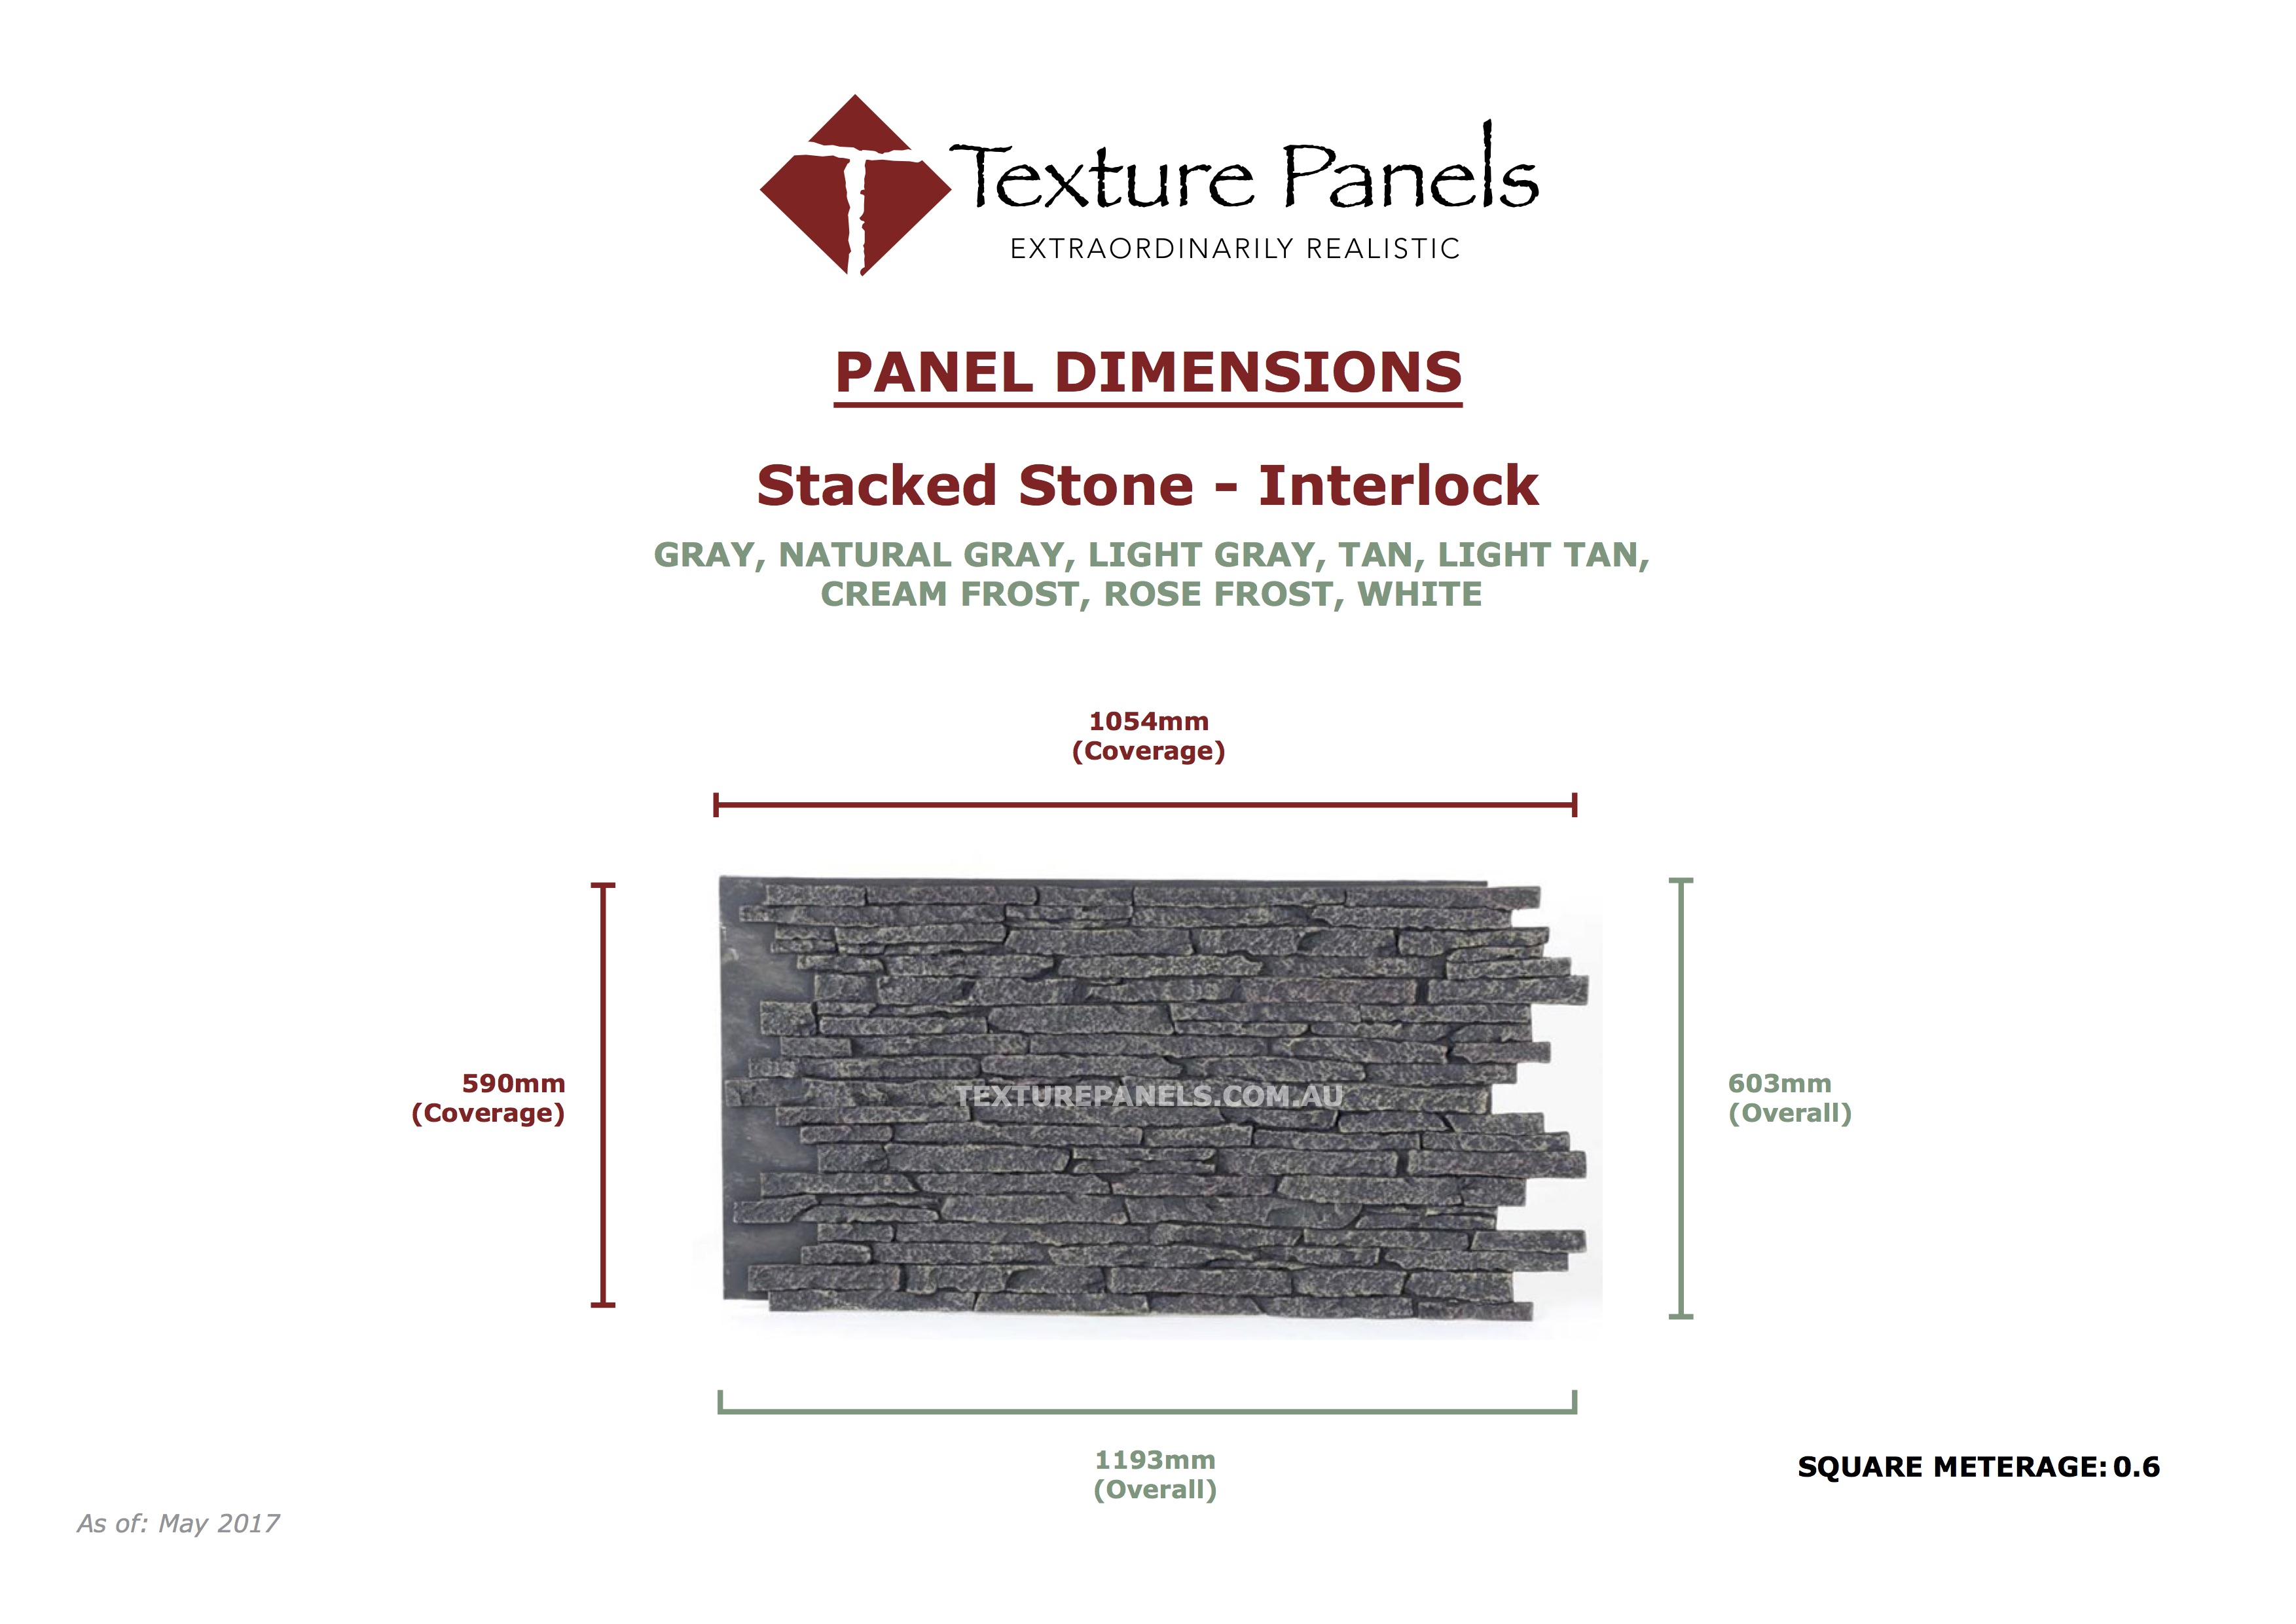 Stacked Stone Interlock - Dimensions